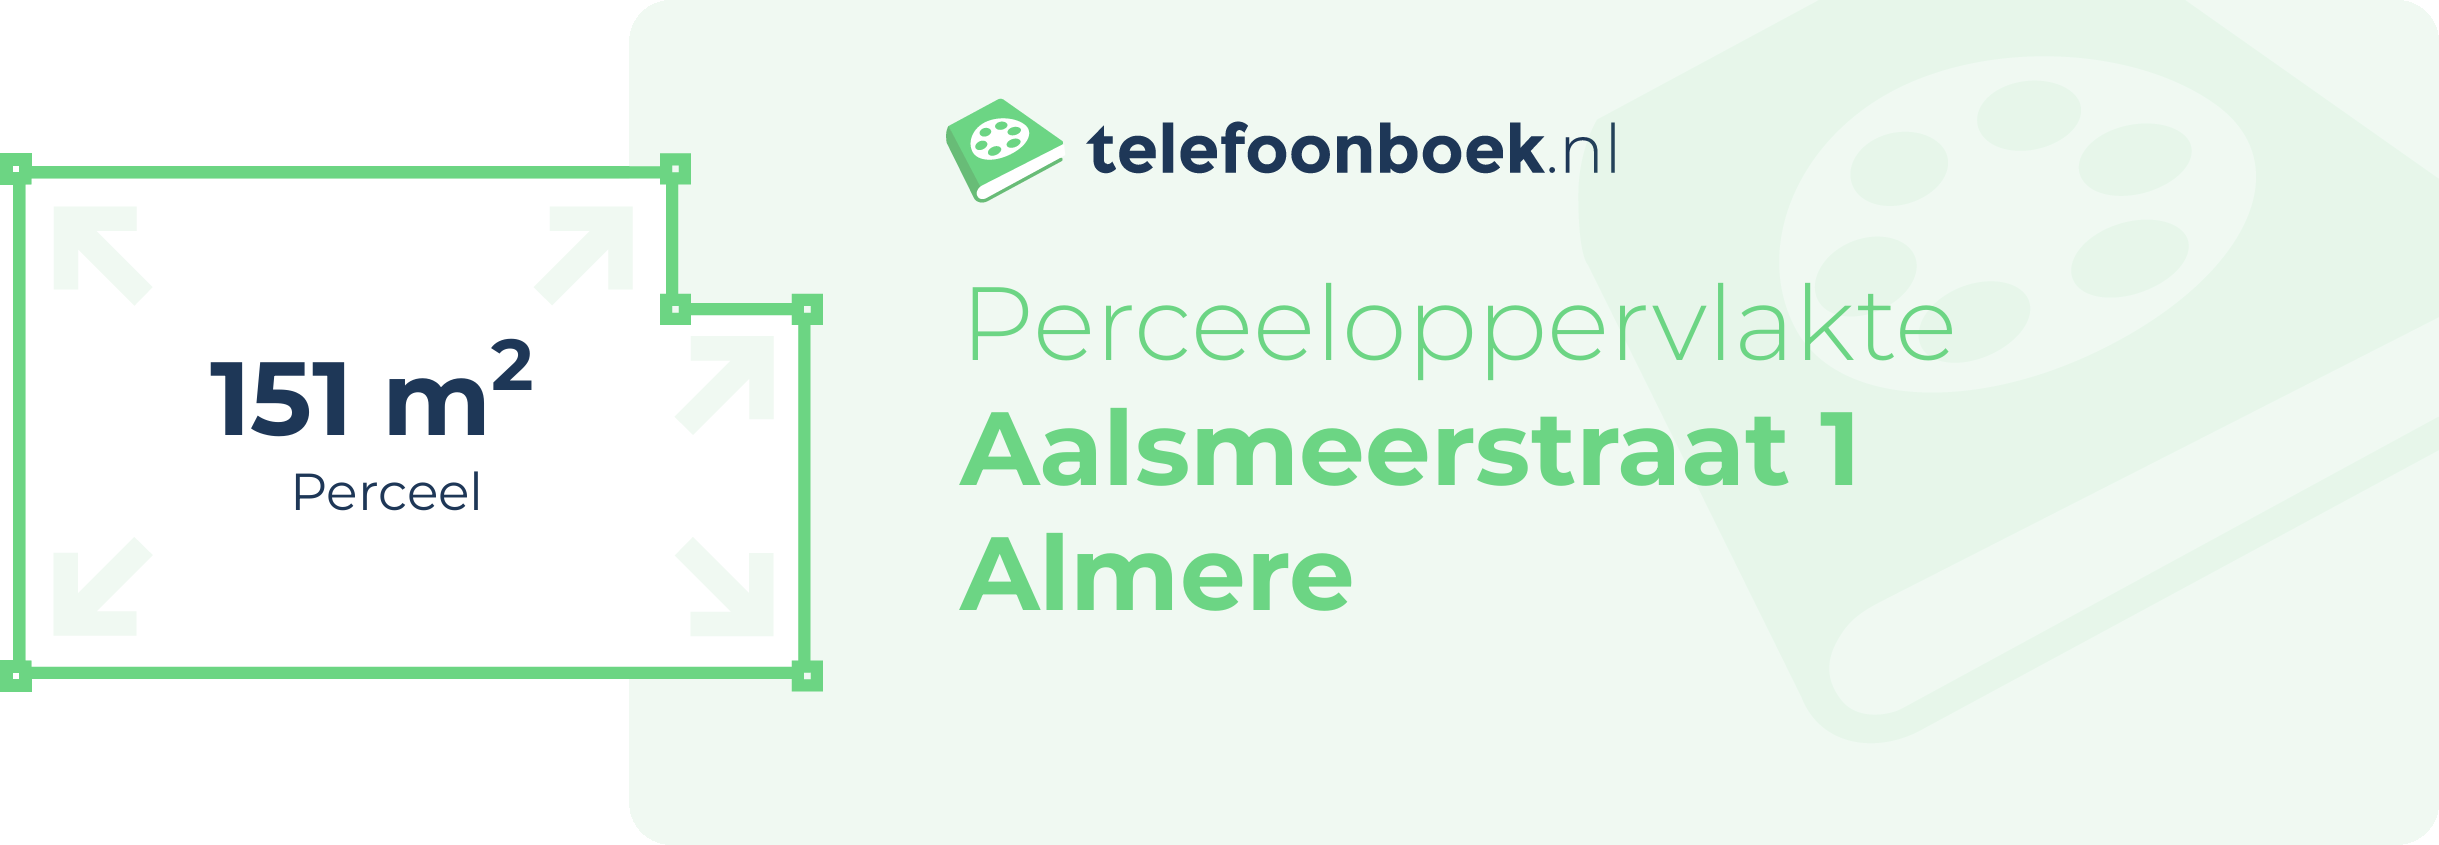 Perceeloppervlakte Aalsmeerstraat 1 Almere